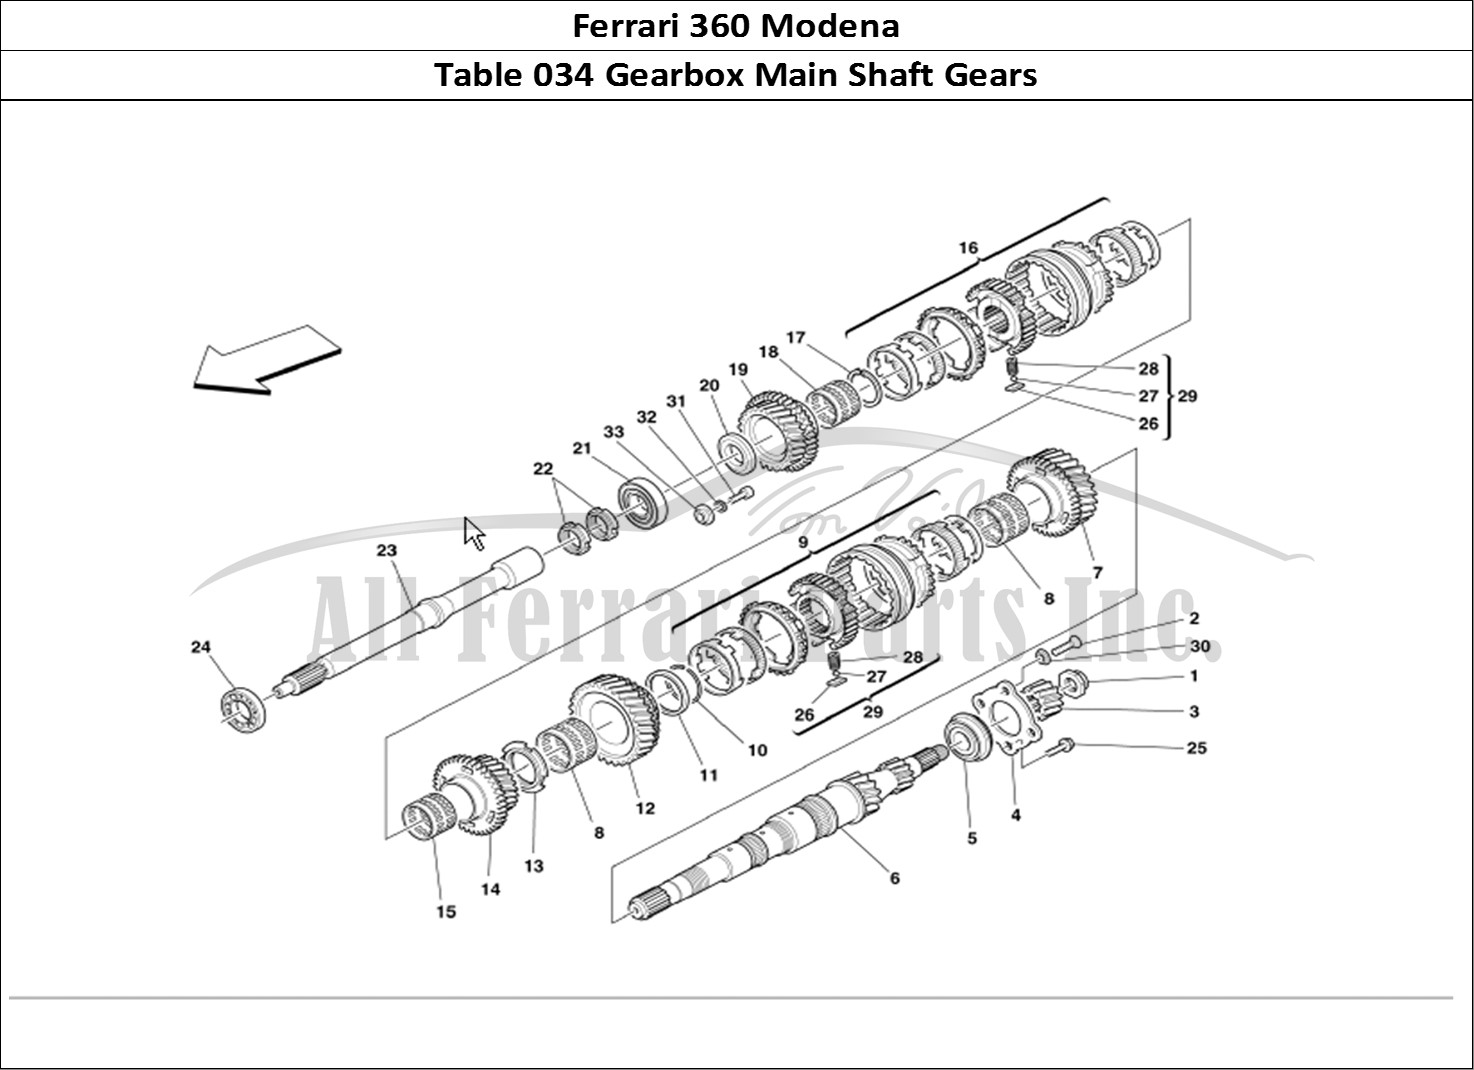 Ferrari Parts Ferrari 360 Modena Page 034 Main Shaft Gears